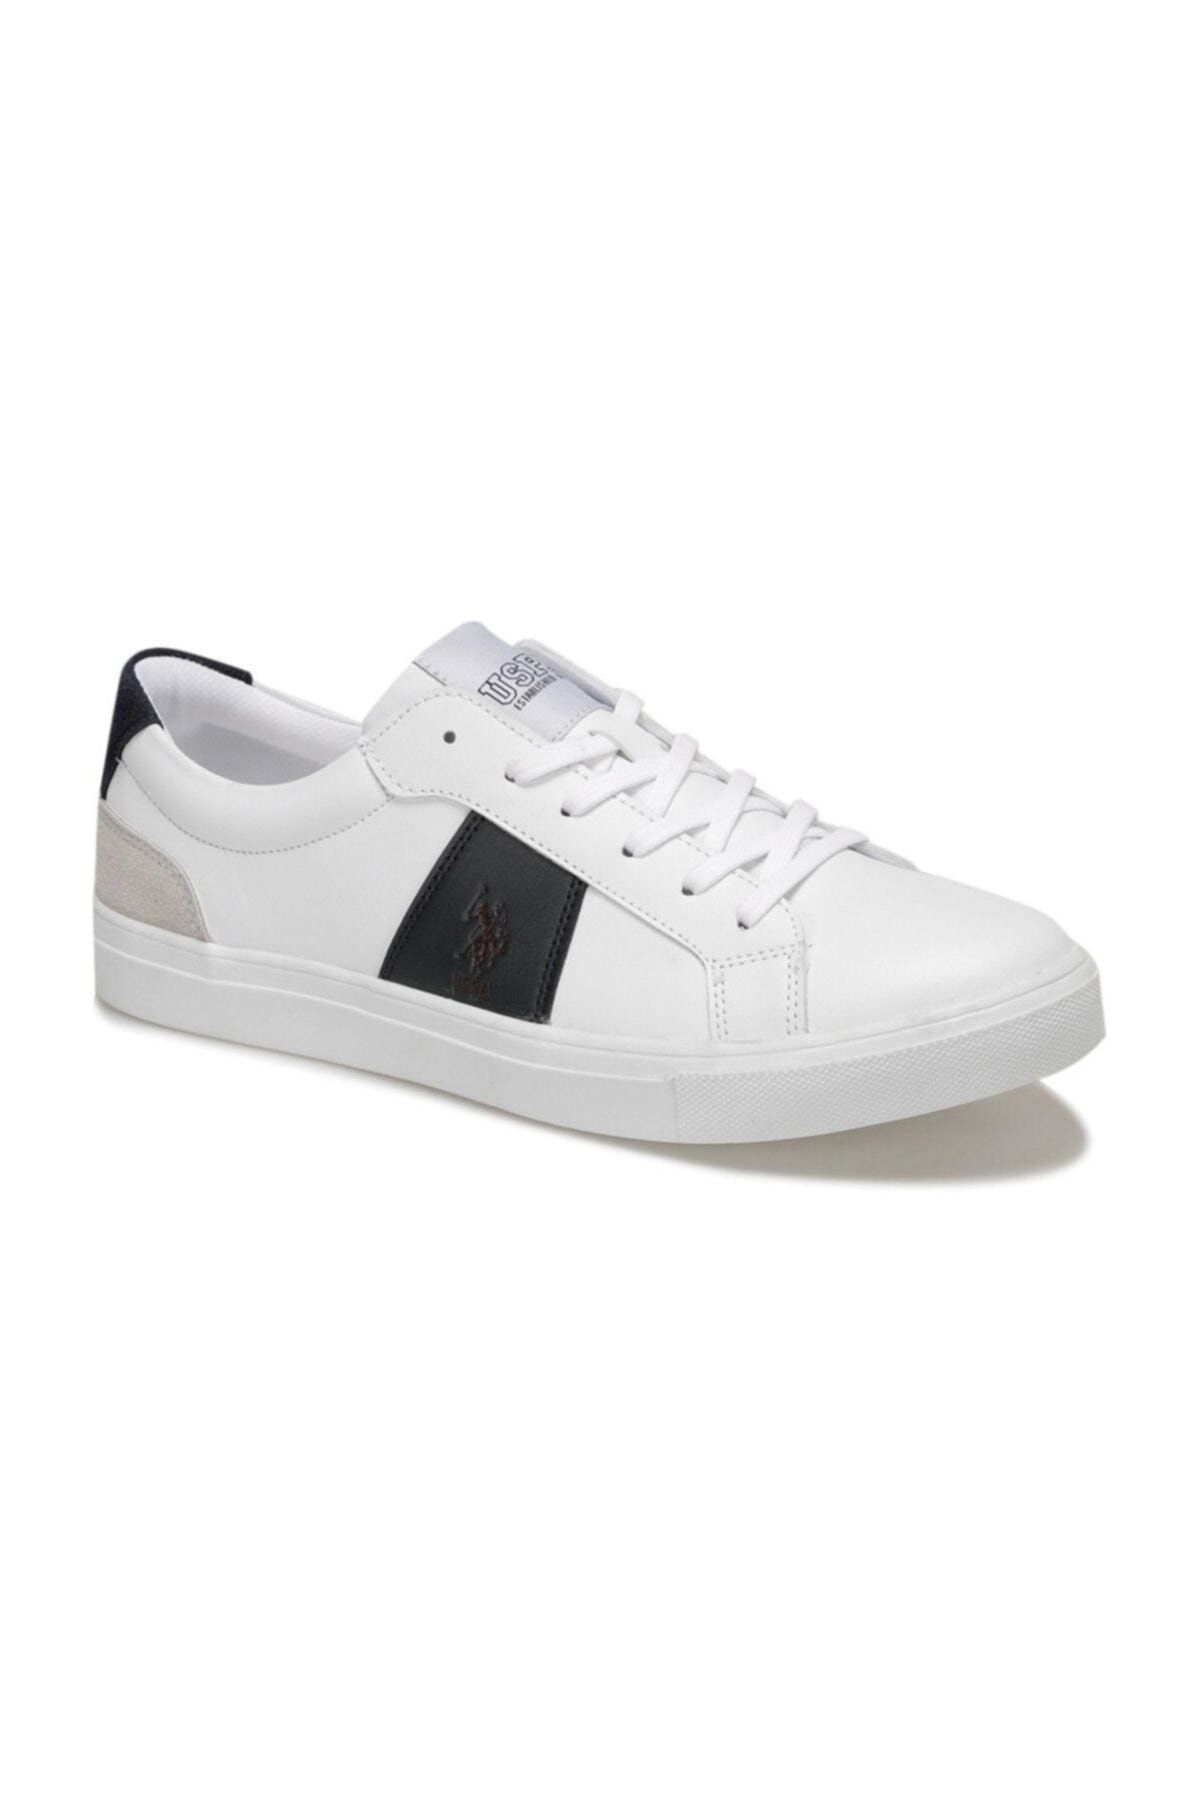 U.S. Polo Assn. ALEN Beyaz Erkek Sneaker Ayakkabı 100505254